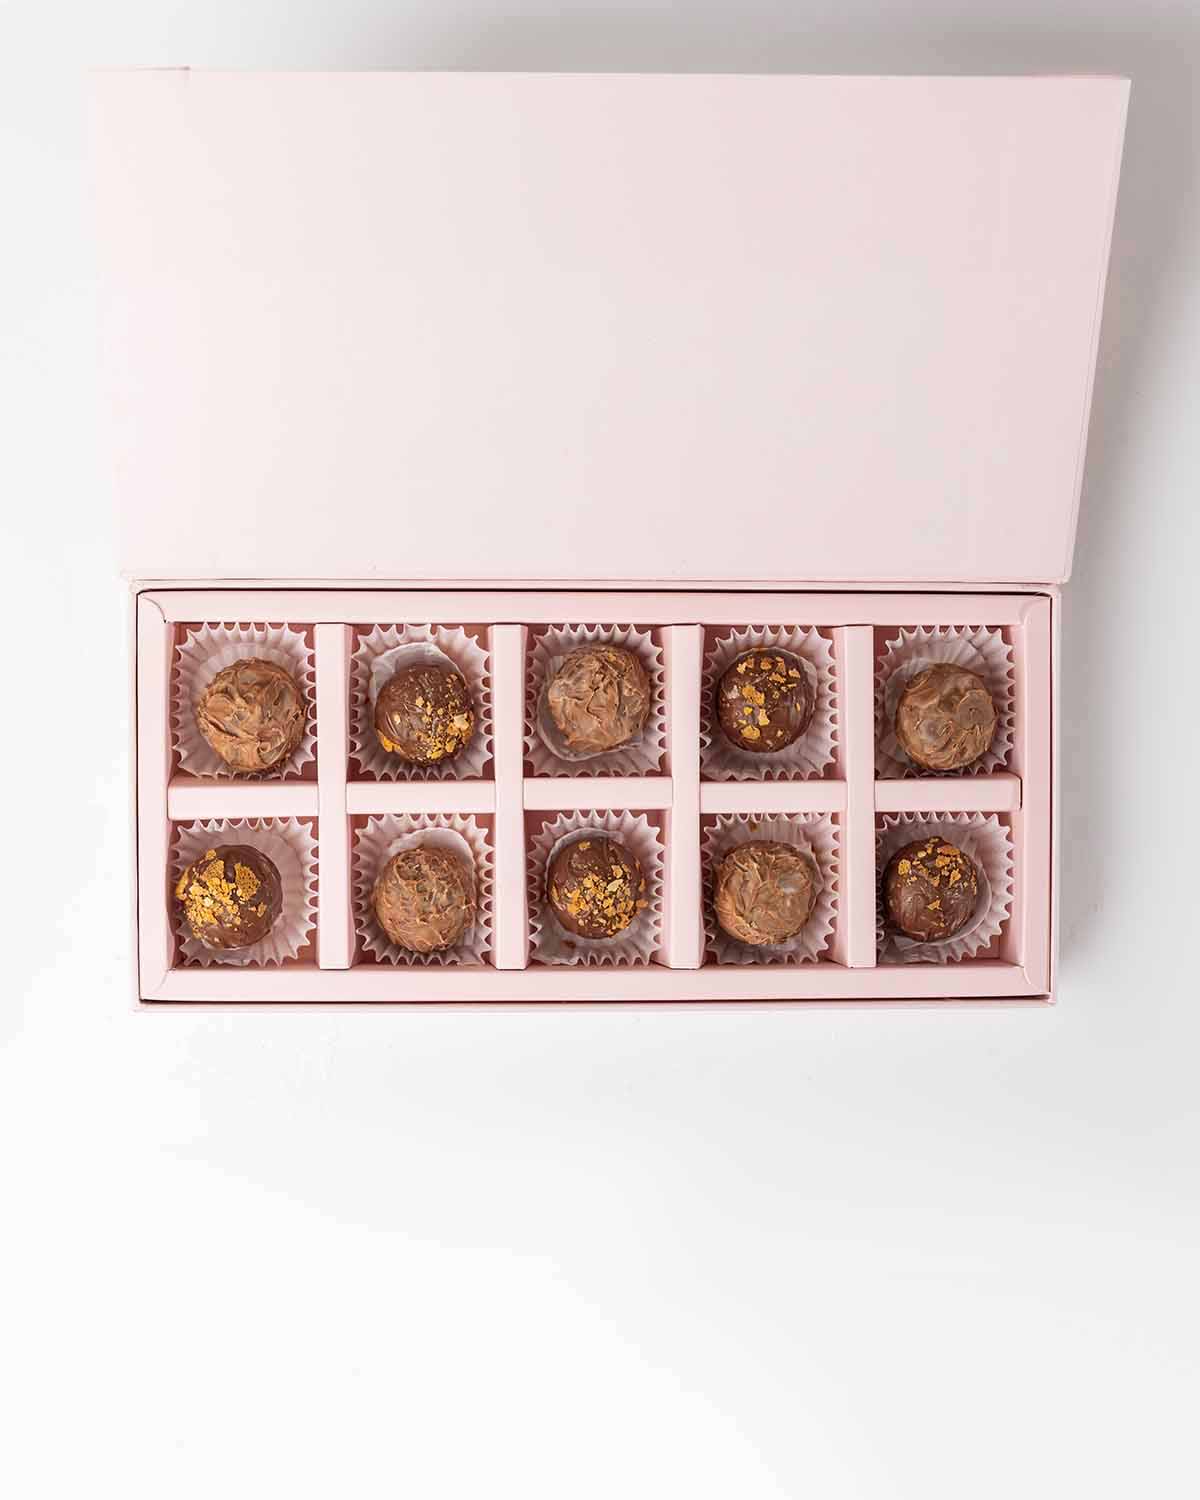 10 Assorted Milk Chocolate Truffles by NJD